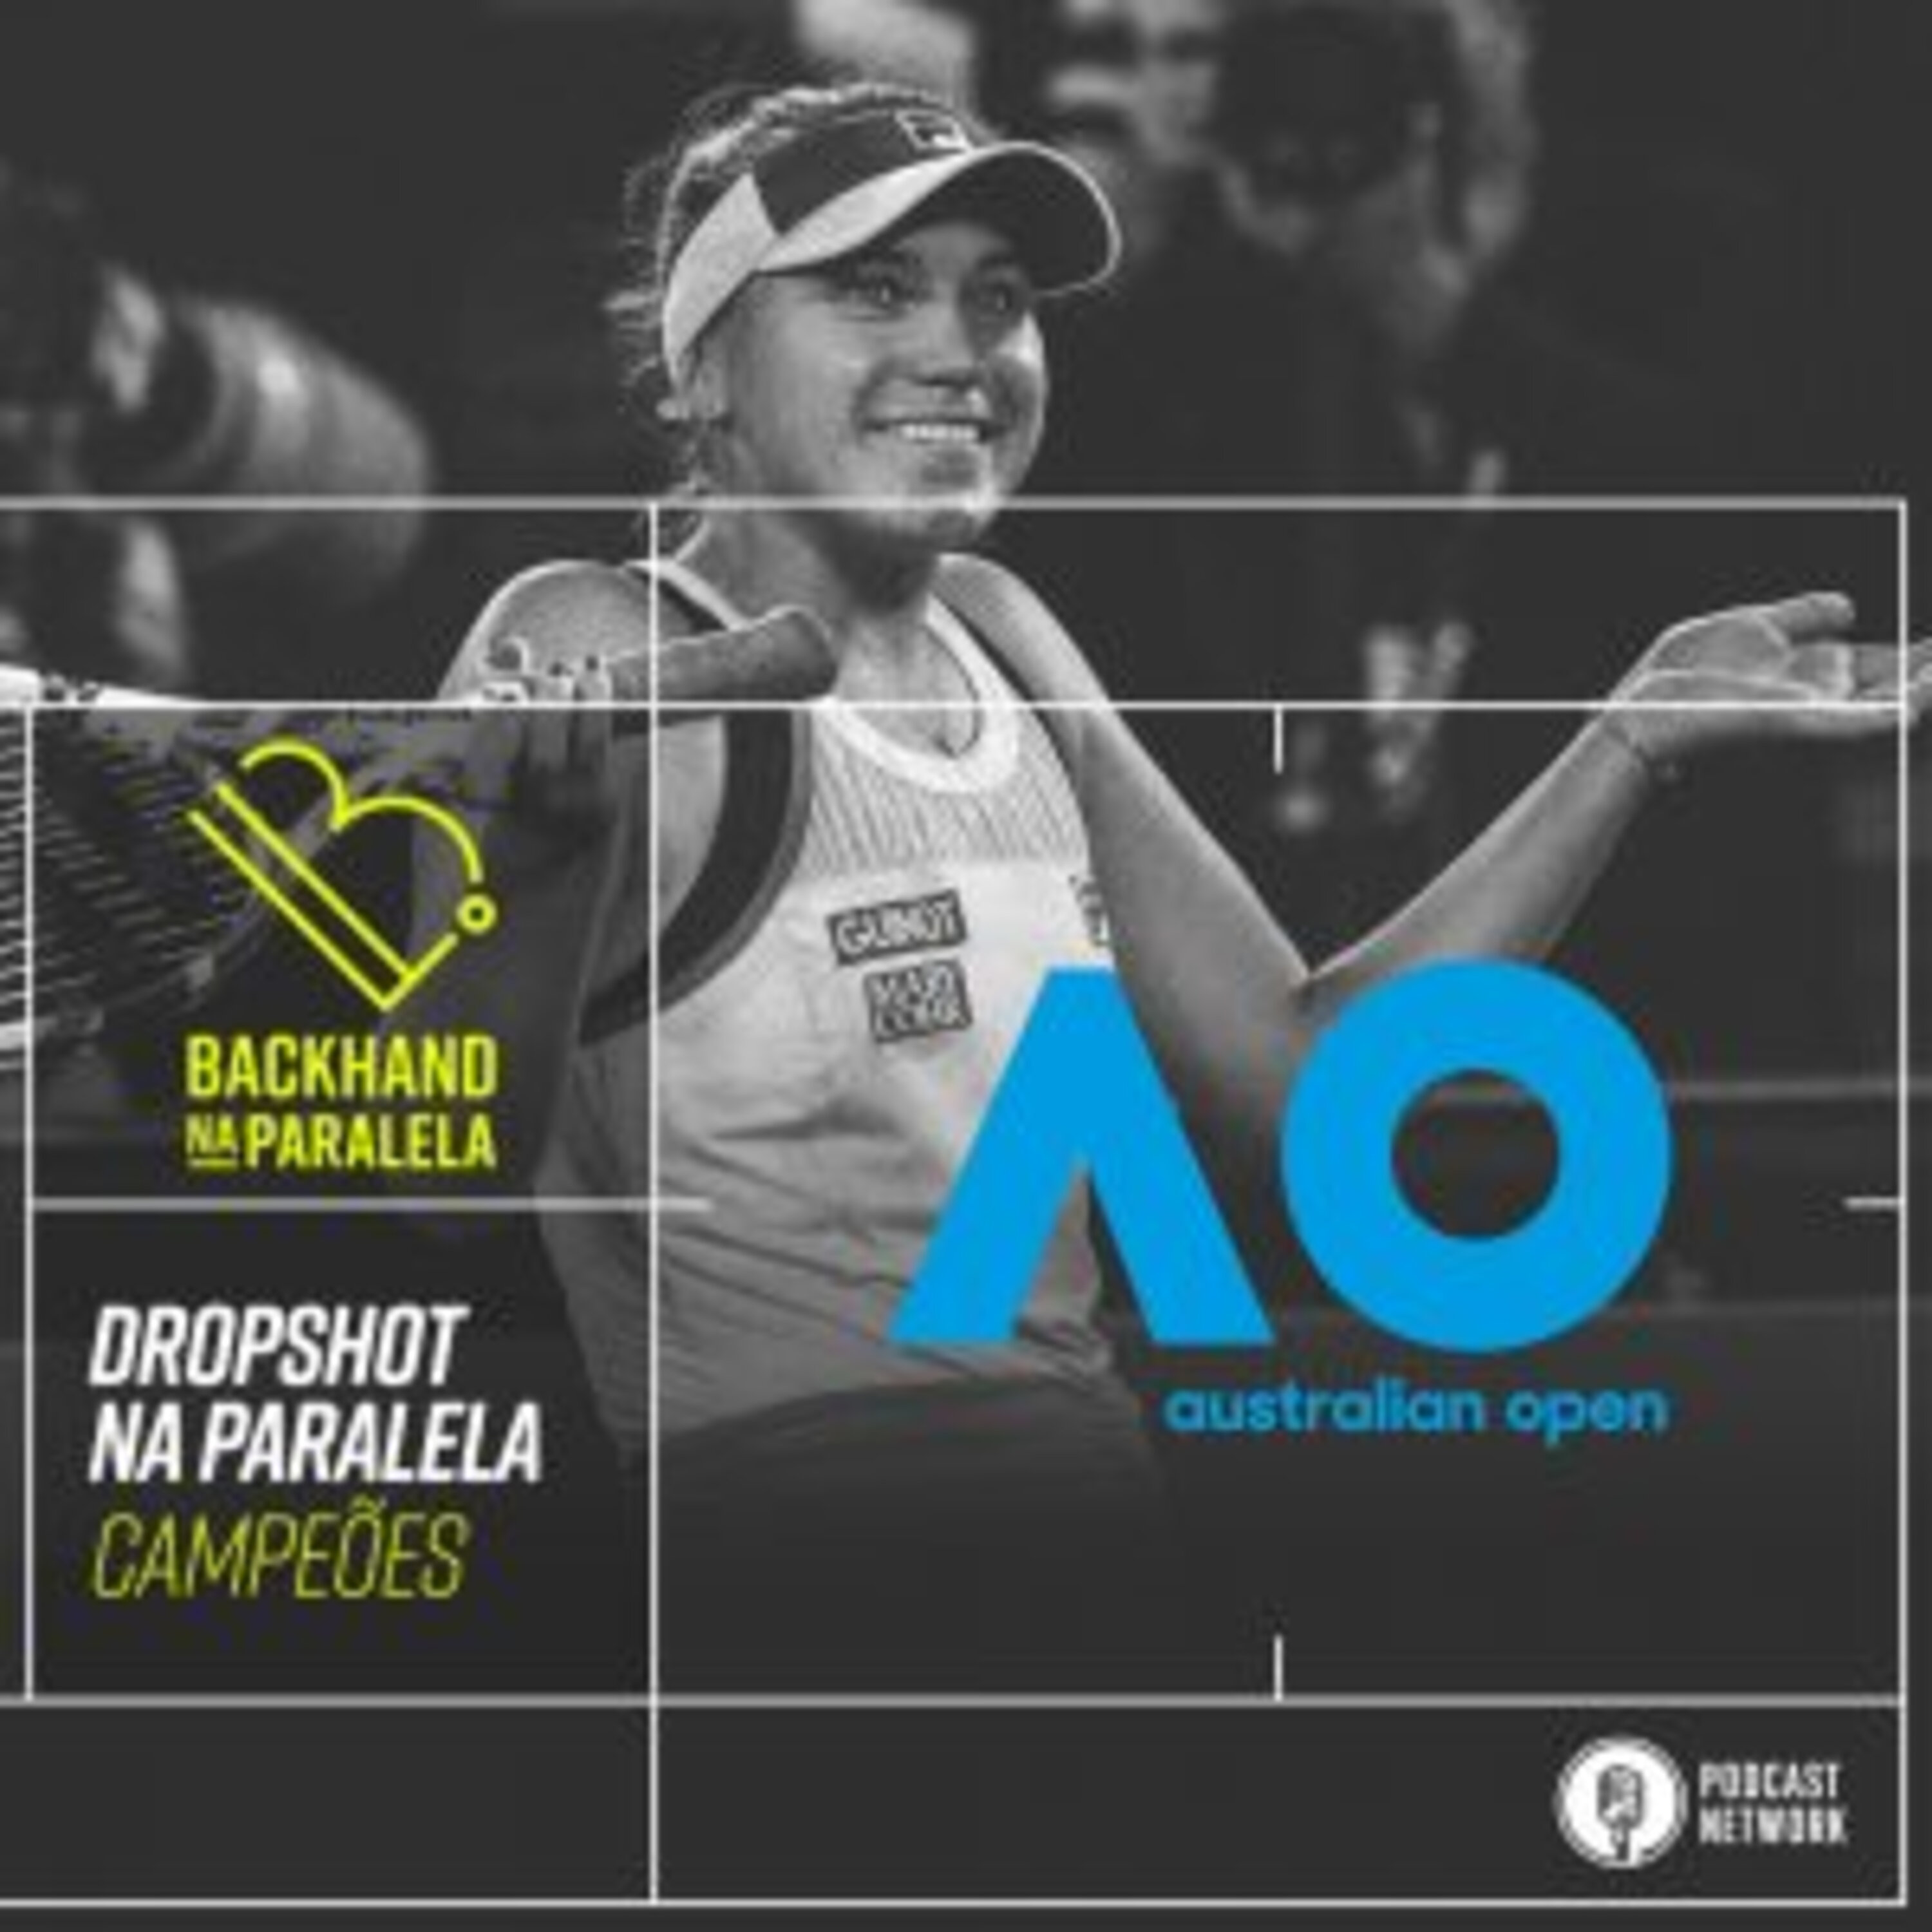 Backhand na Paralela – Dropshot na Paralela Australian Open 2020 – Kenin e Djokovic campeões!